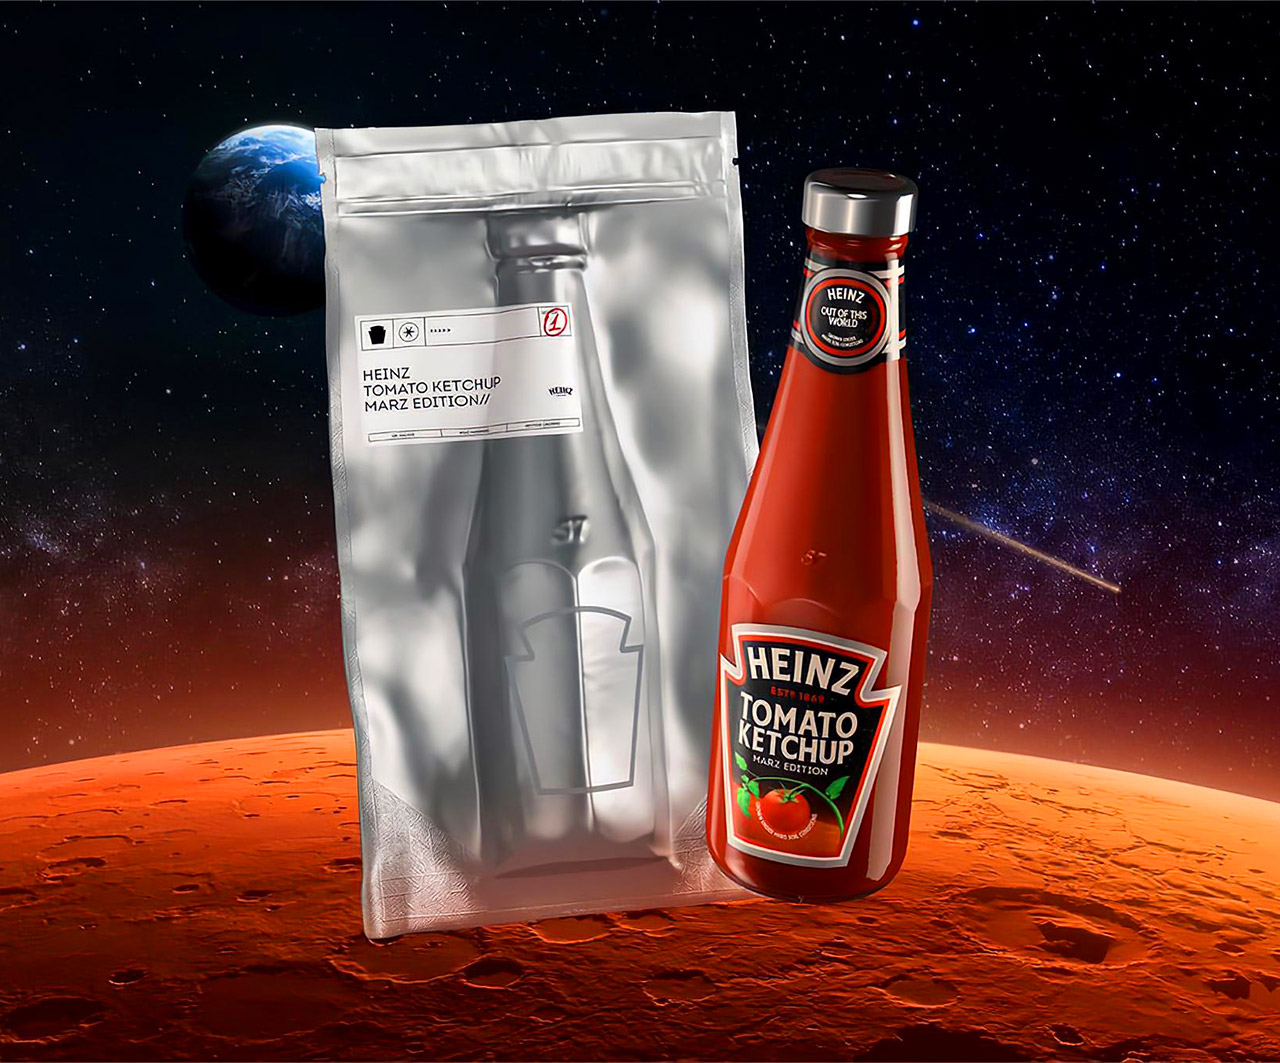 Heinz Tomato Ketchup Marz Edition Mars